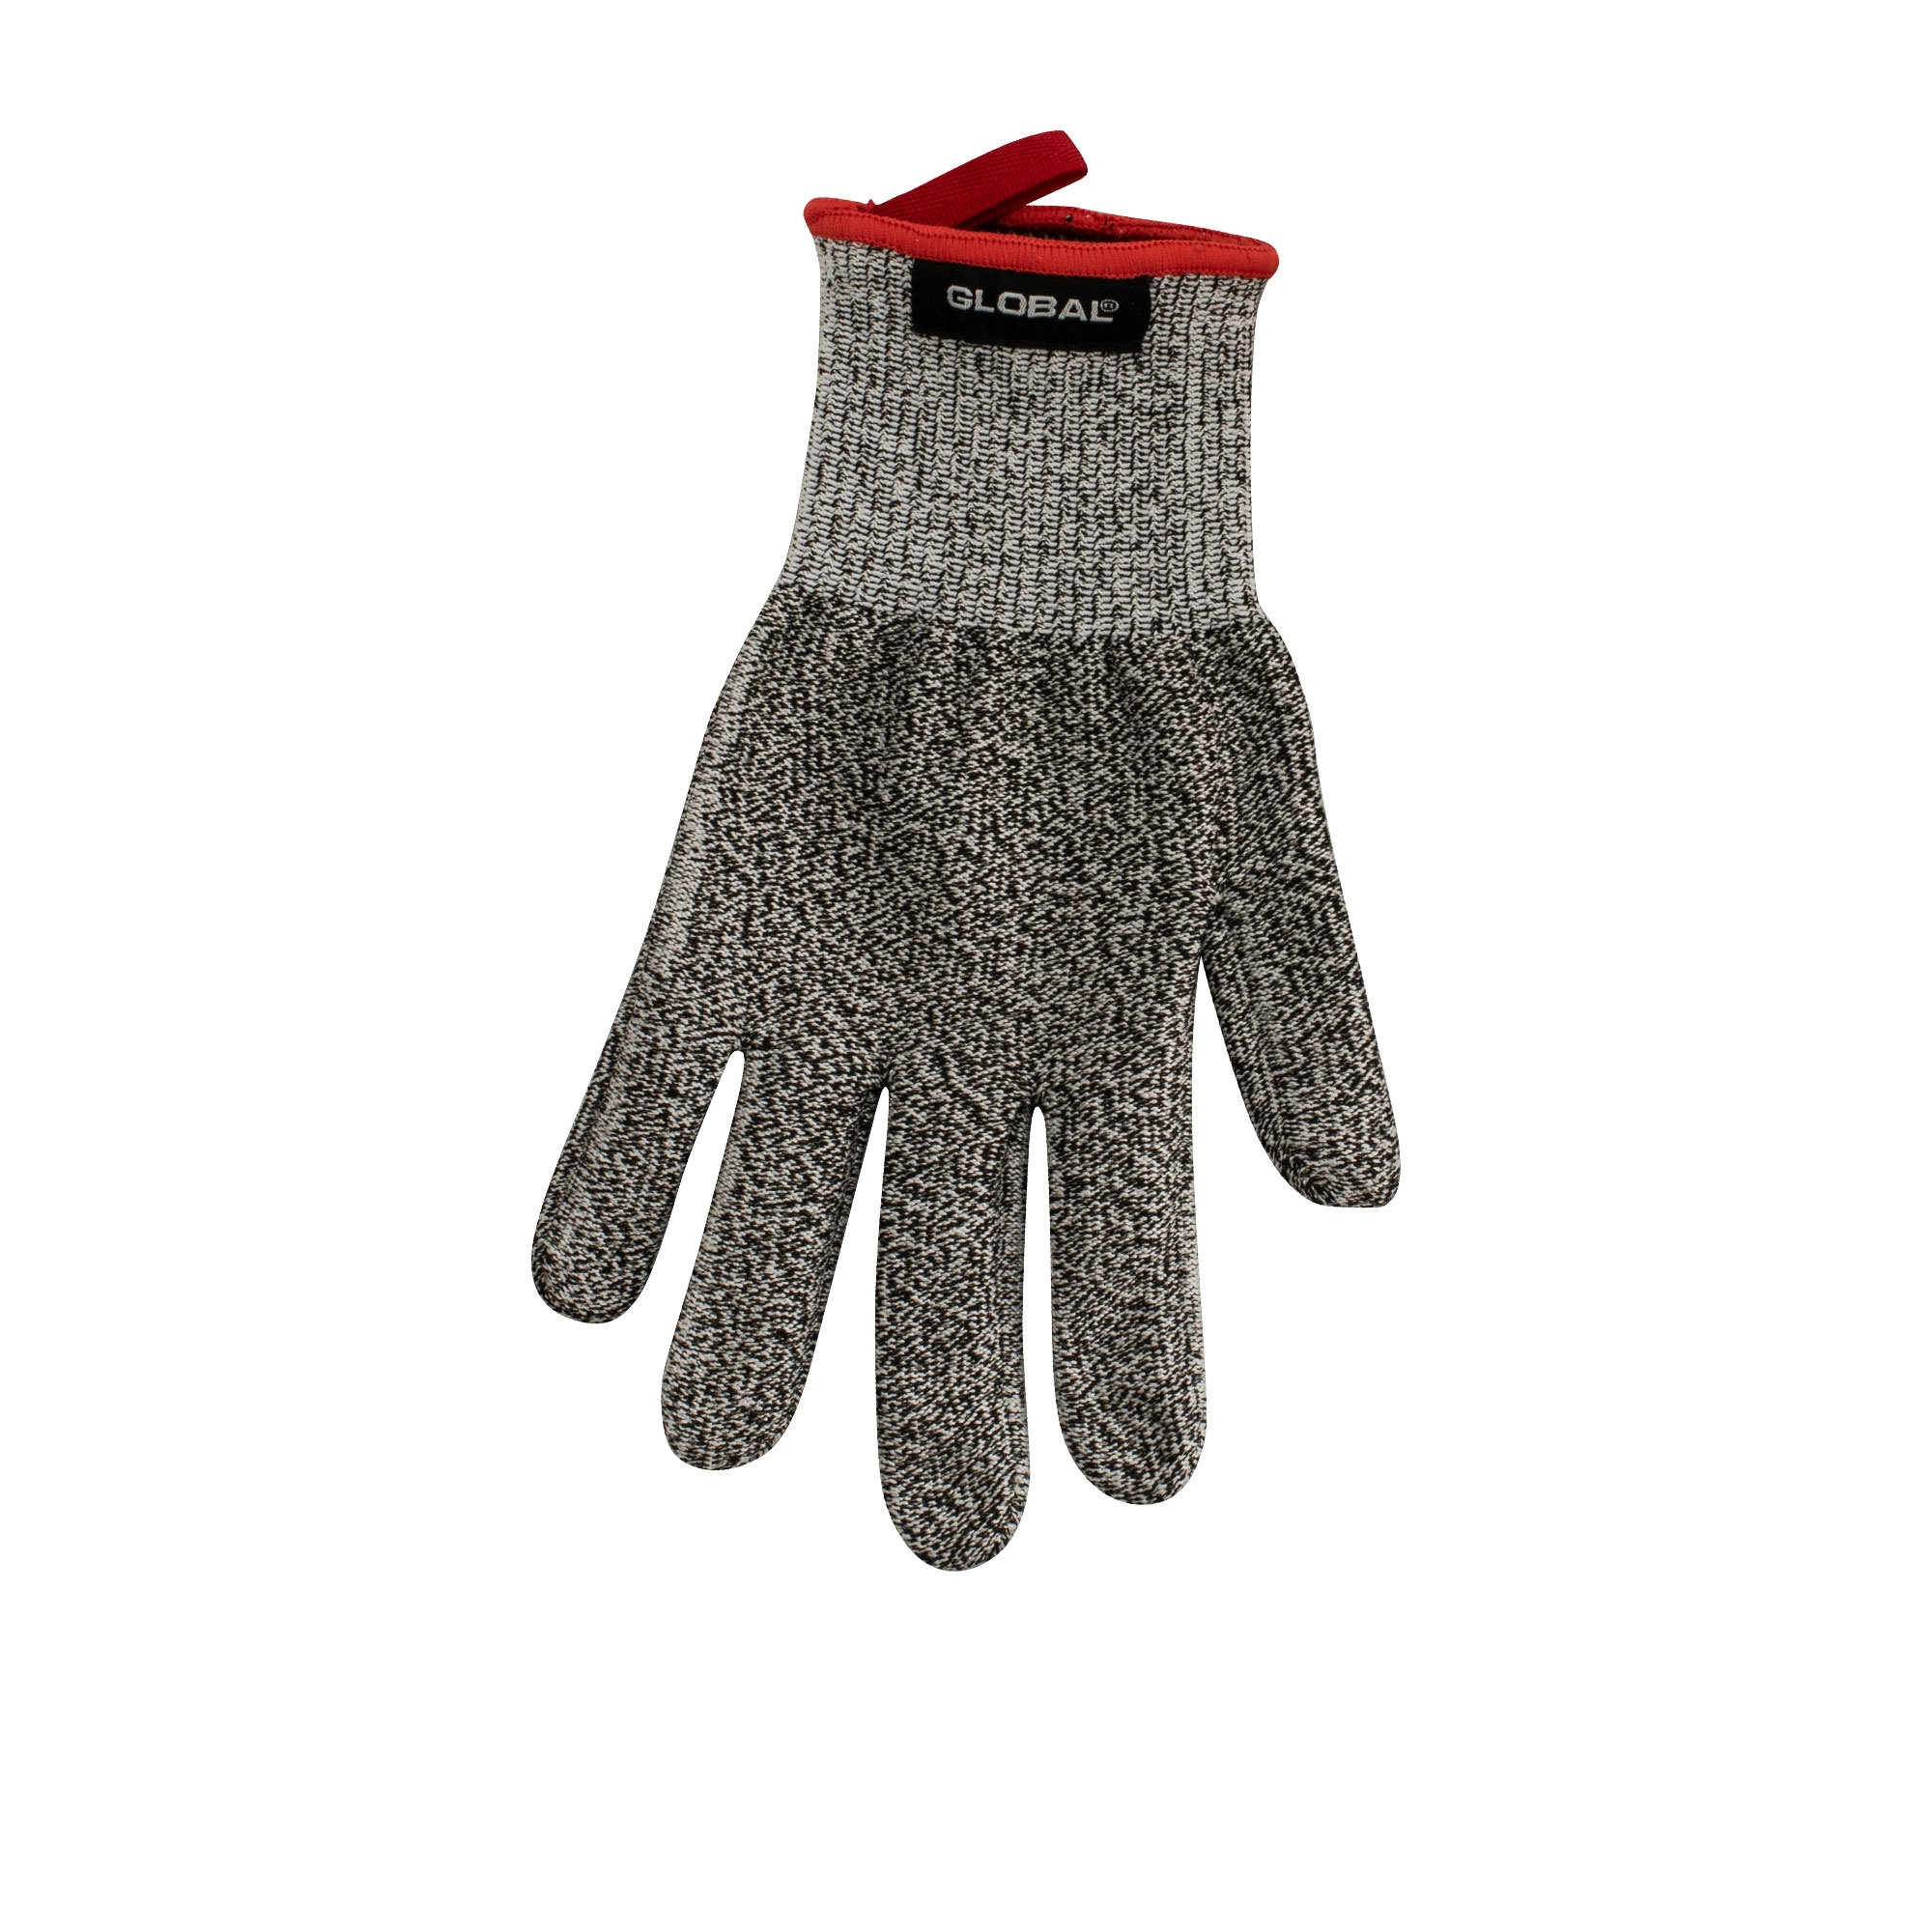 Global Cut Resistant Gloves Grey Image 2